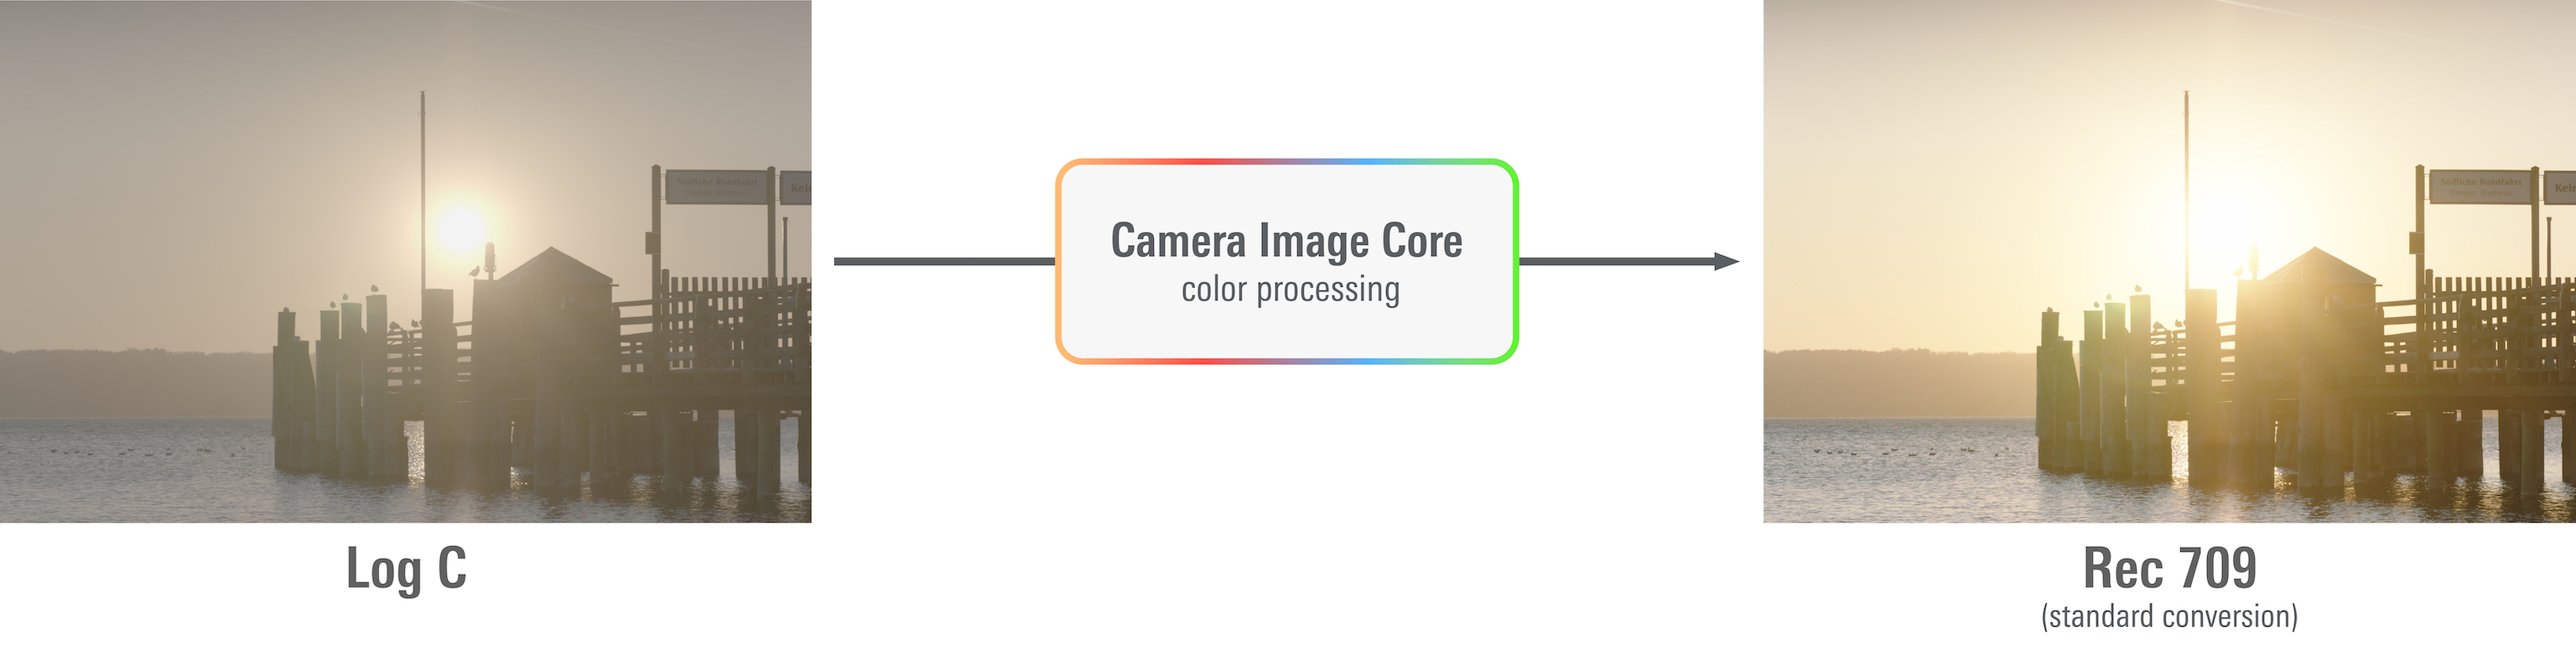 Log C to Rec 709 conversion using the Camera Image Core